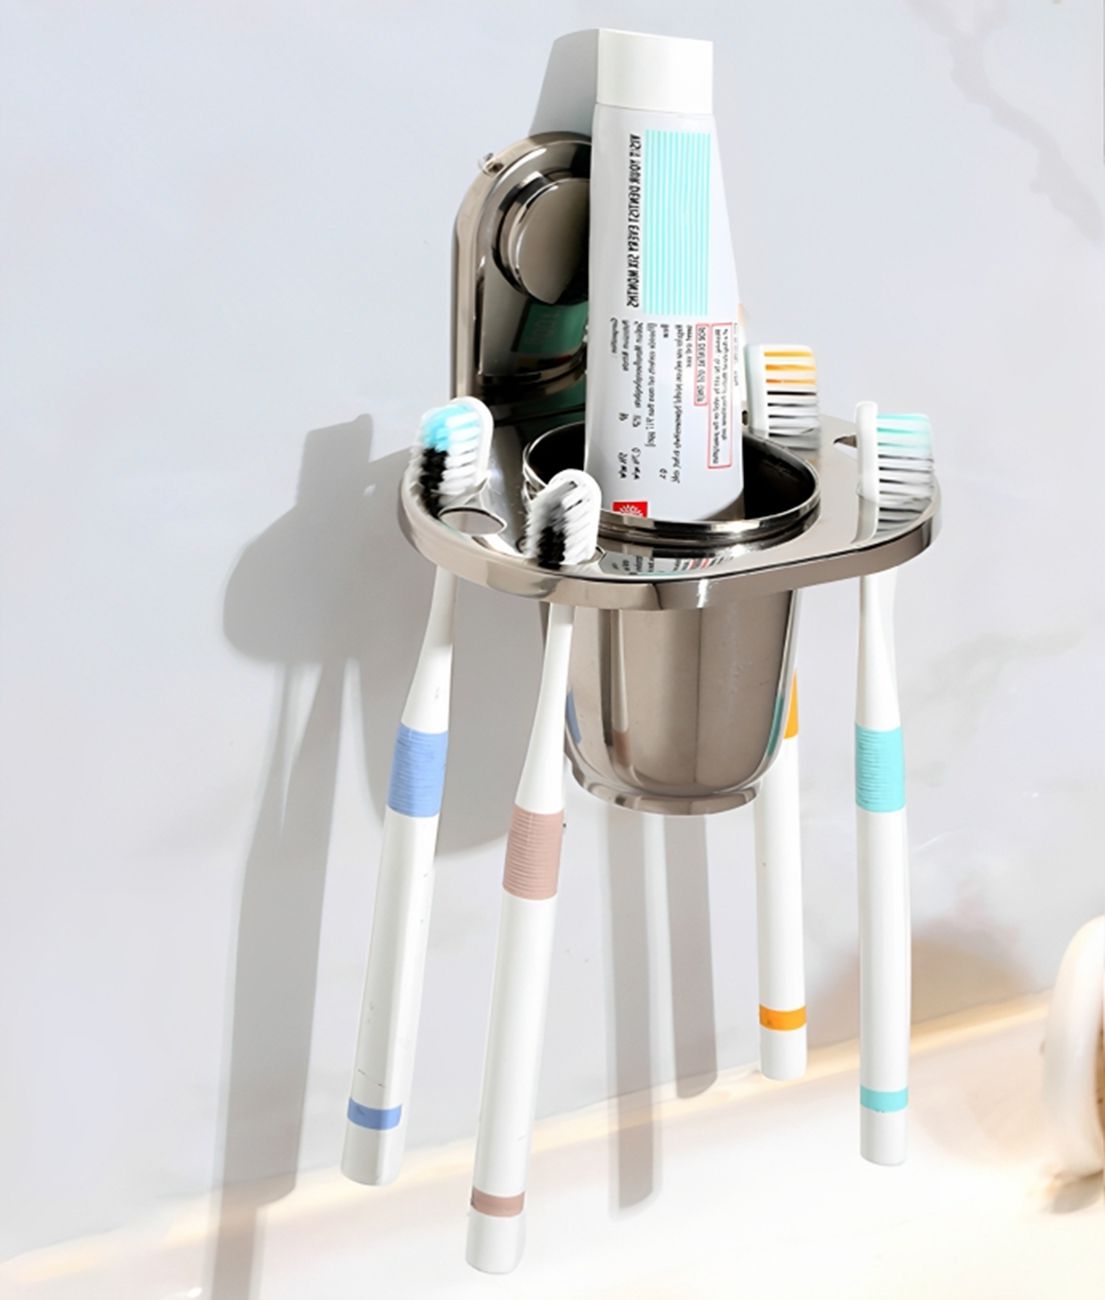     			HOMETALES - Stainless Steel Premium Bathroom Tooth Brush holder